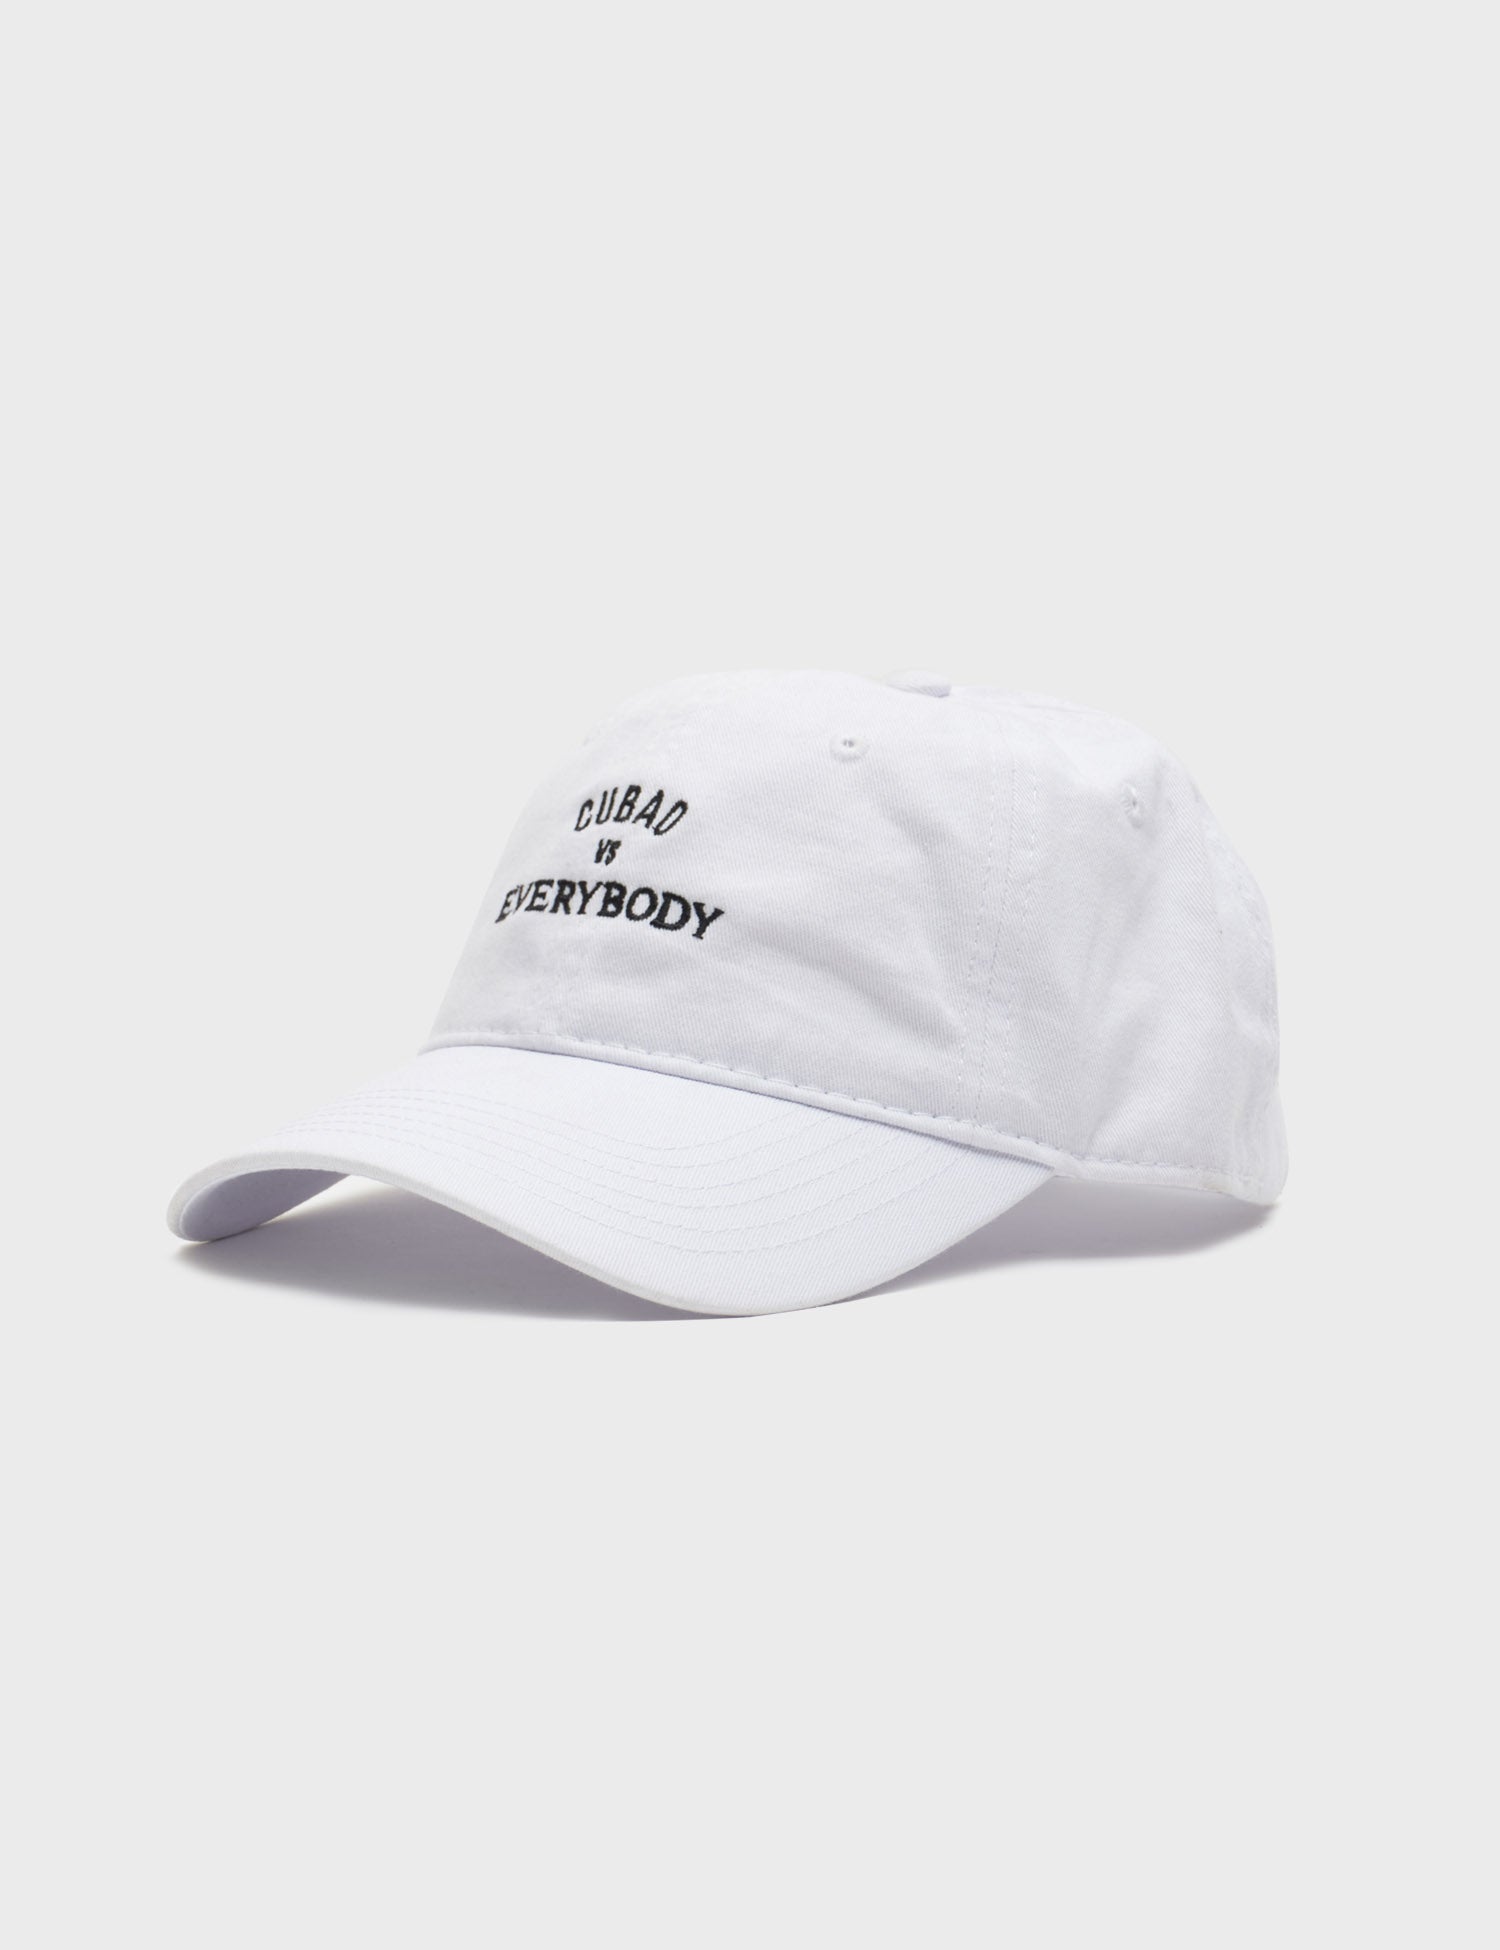 Cubao VS Everybody Hat (White)